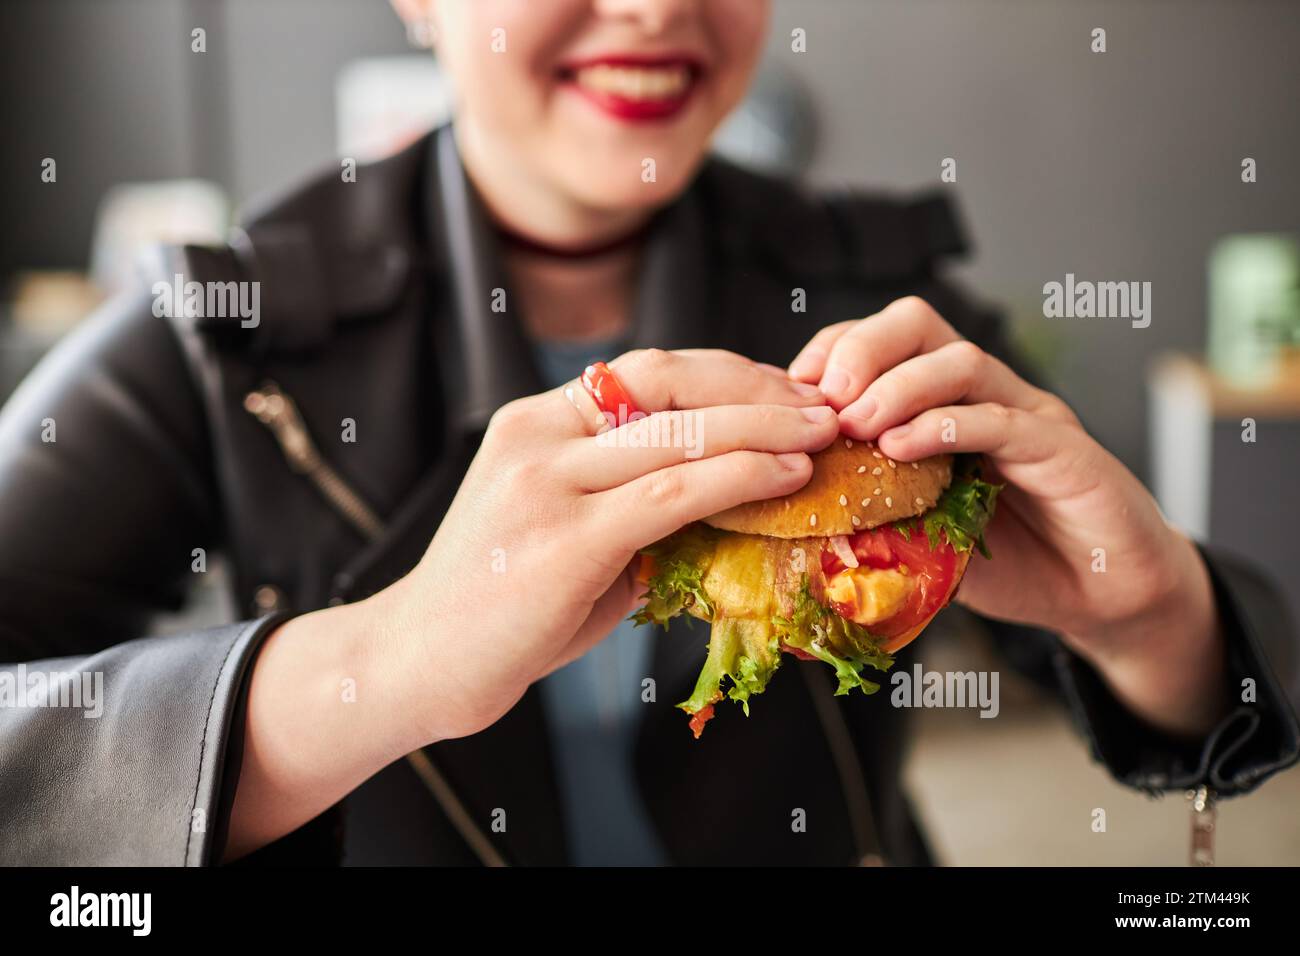 Smiling Girl Holding Burger Stock Photo